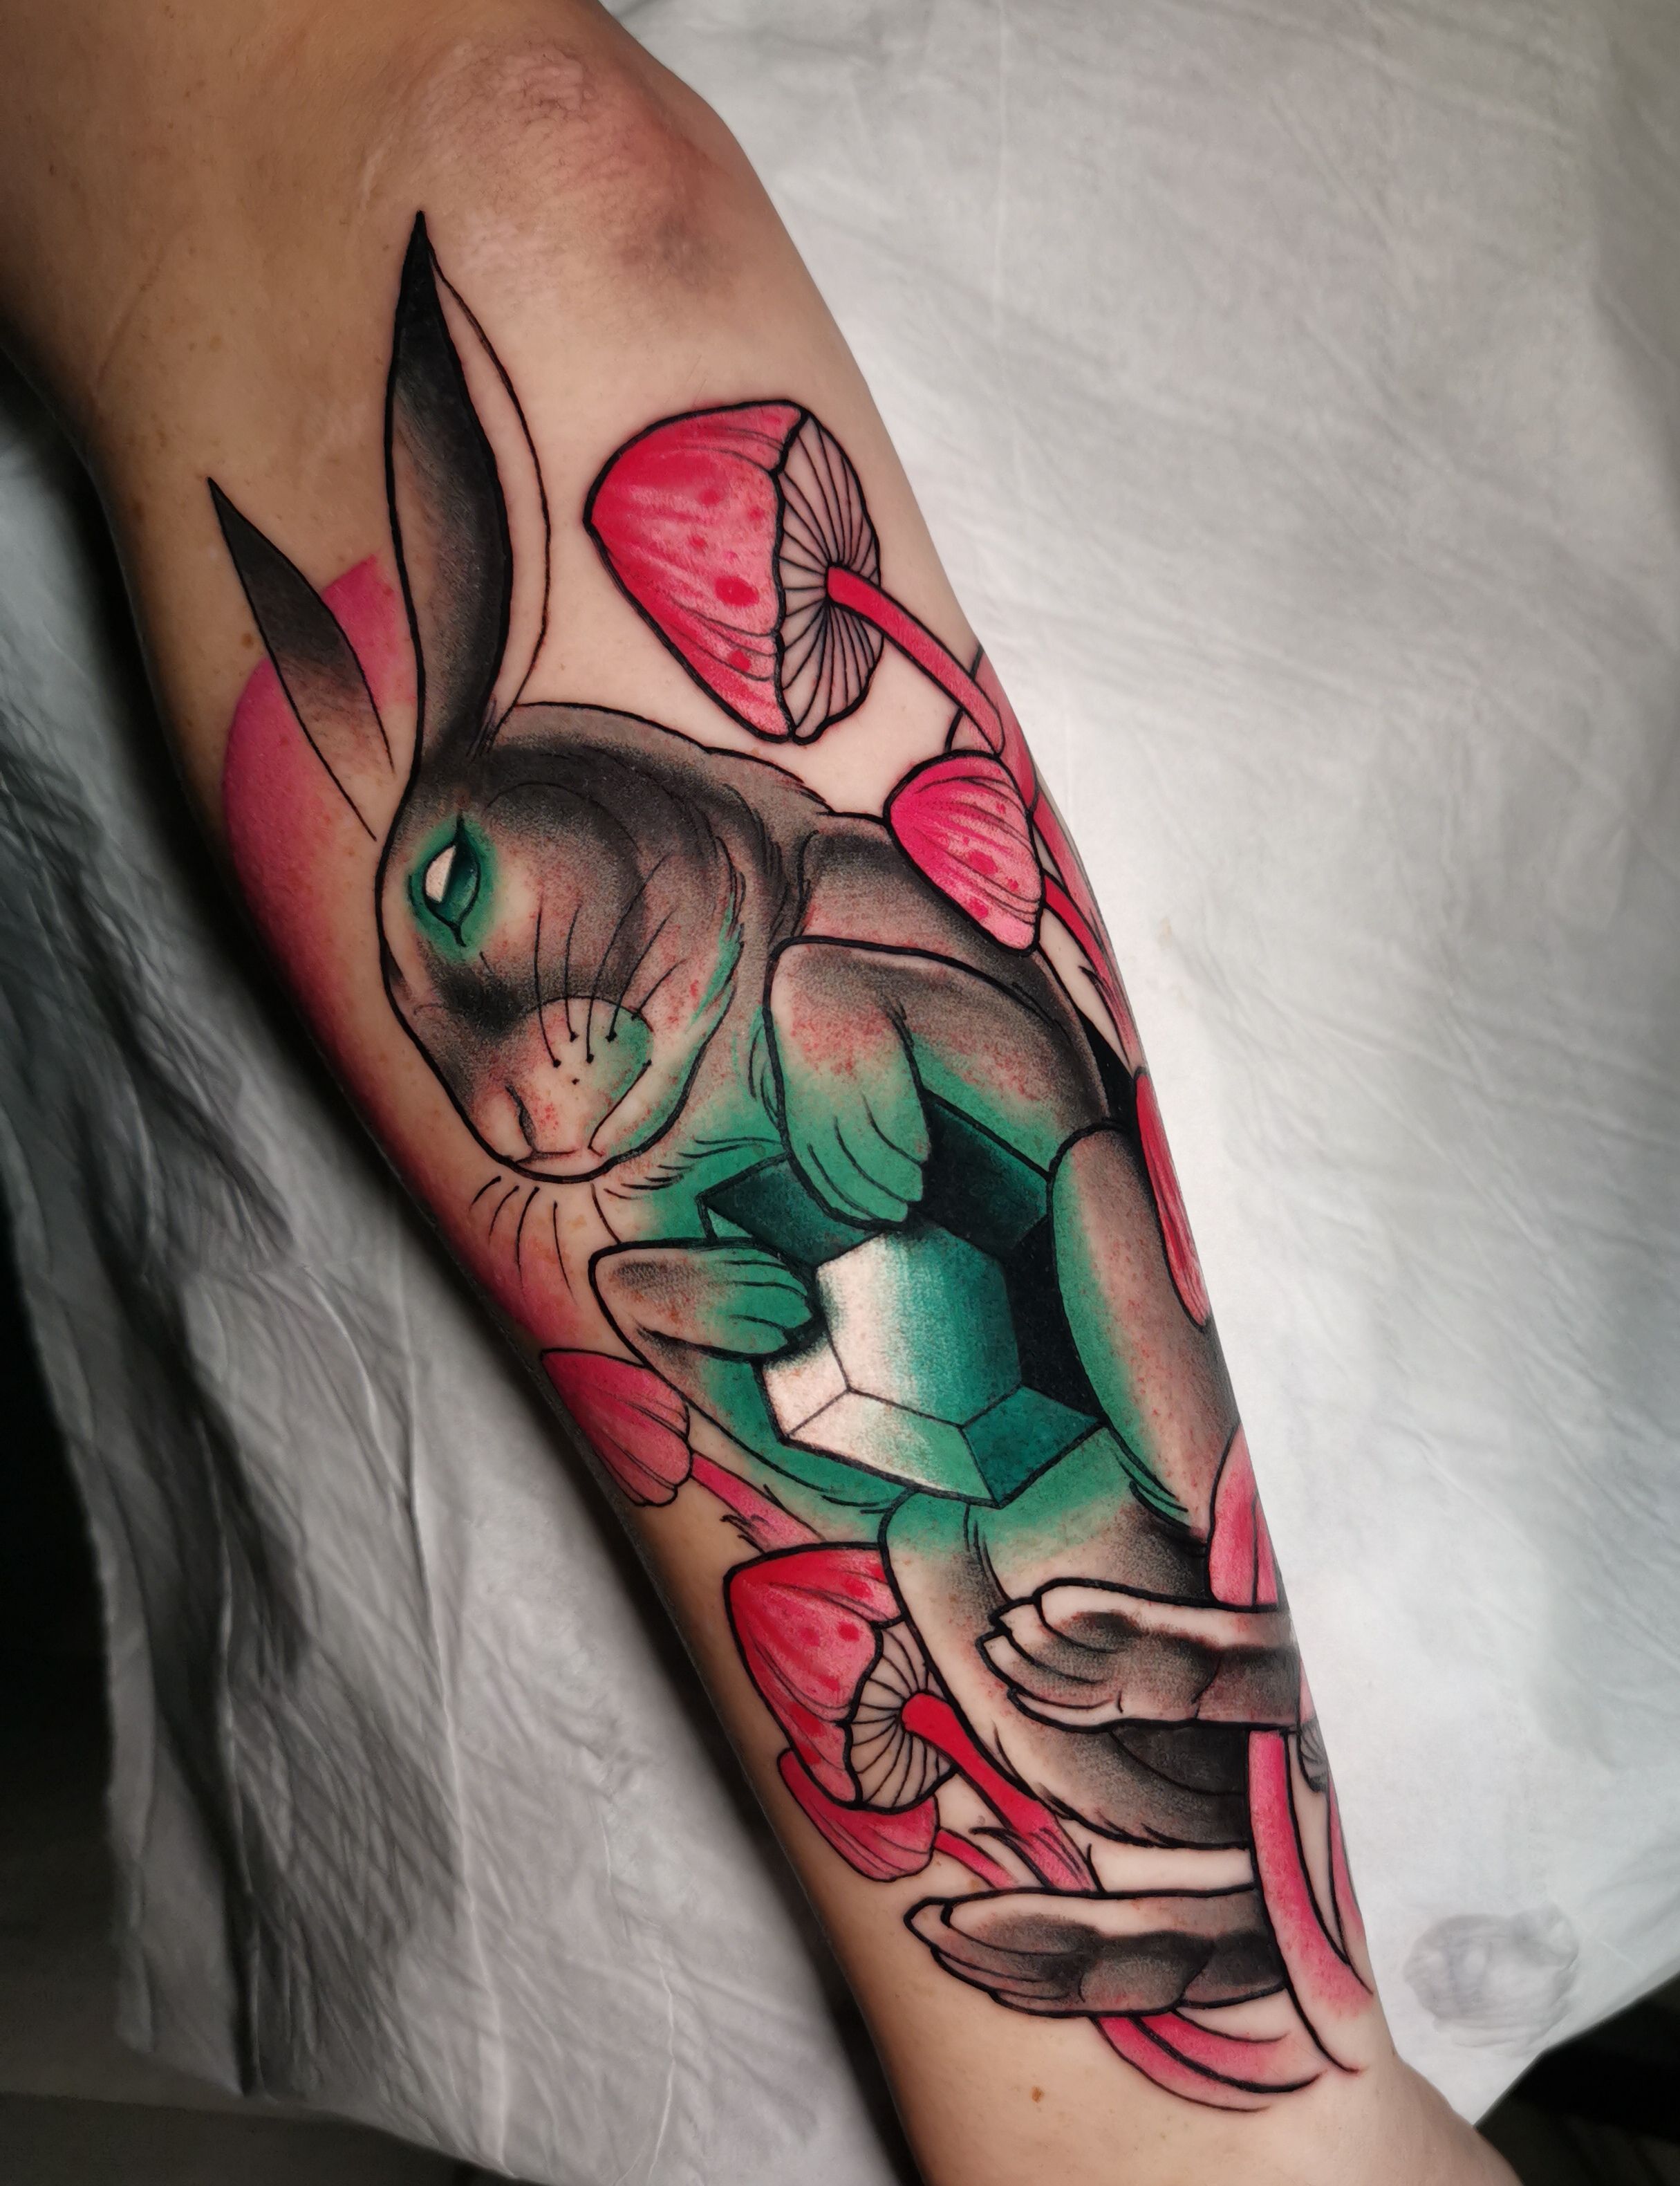 Rabbit tattoo 2 by Diva161 on DeviantArt